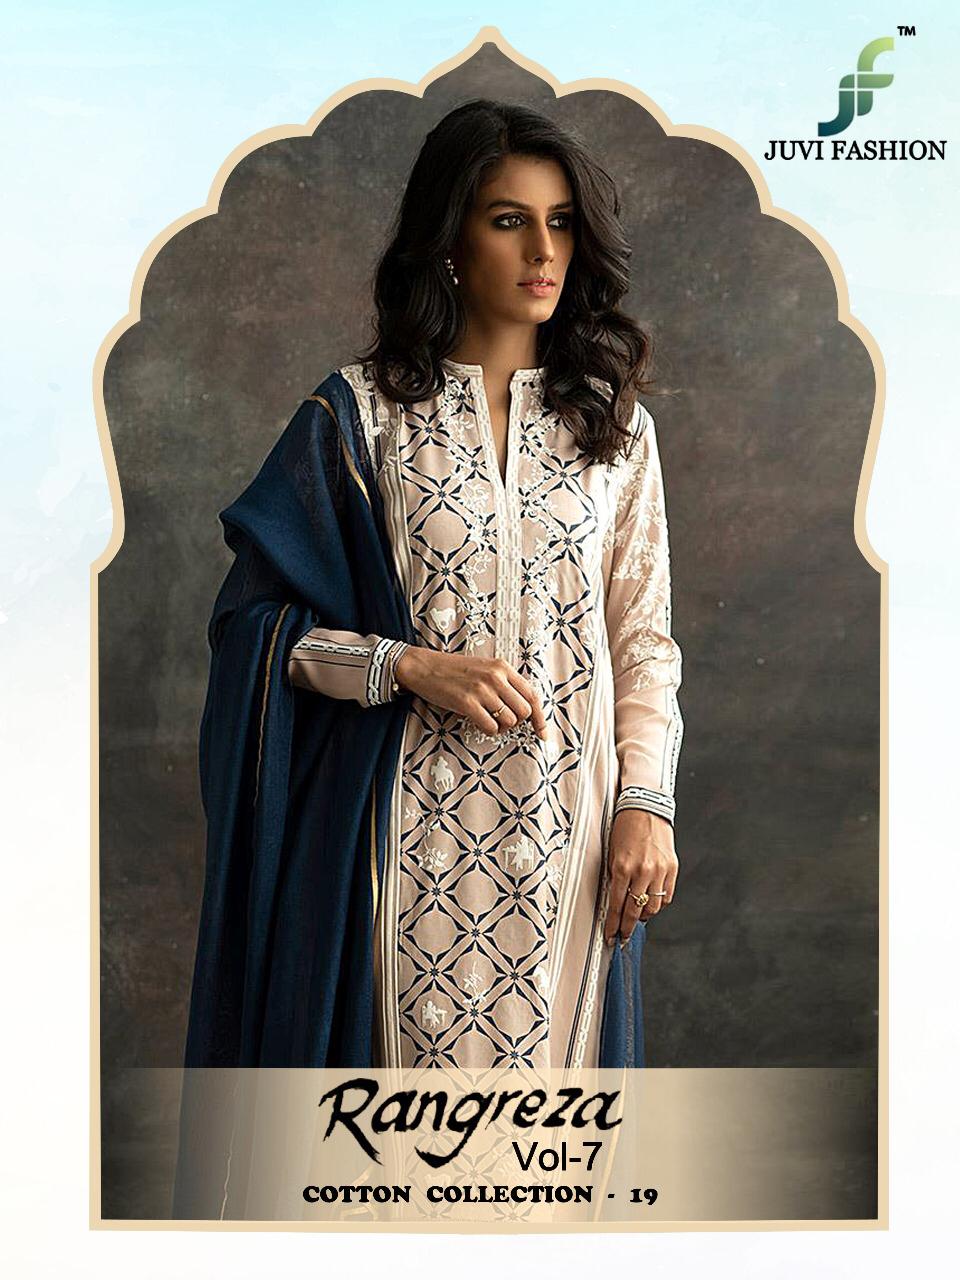 juvi fashion rangreza vol 7 colorful collection of salwaar suits at reasonable rate